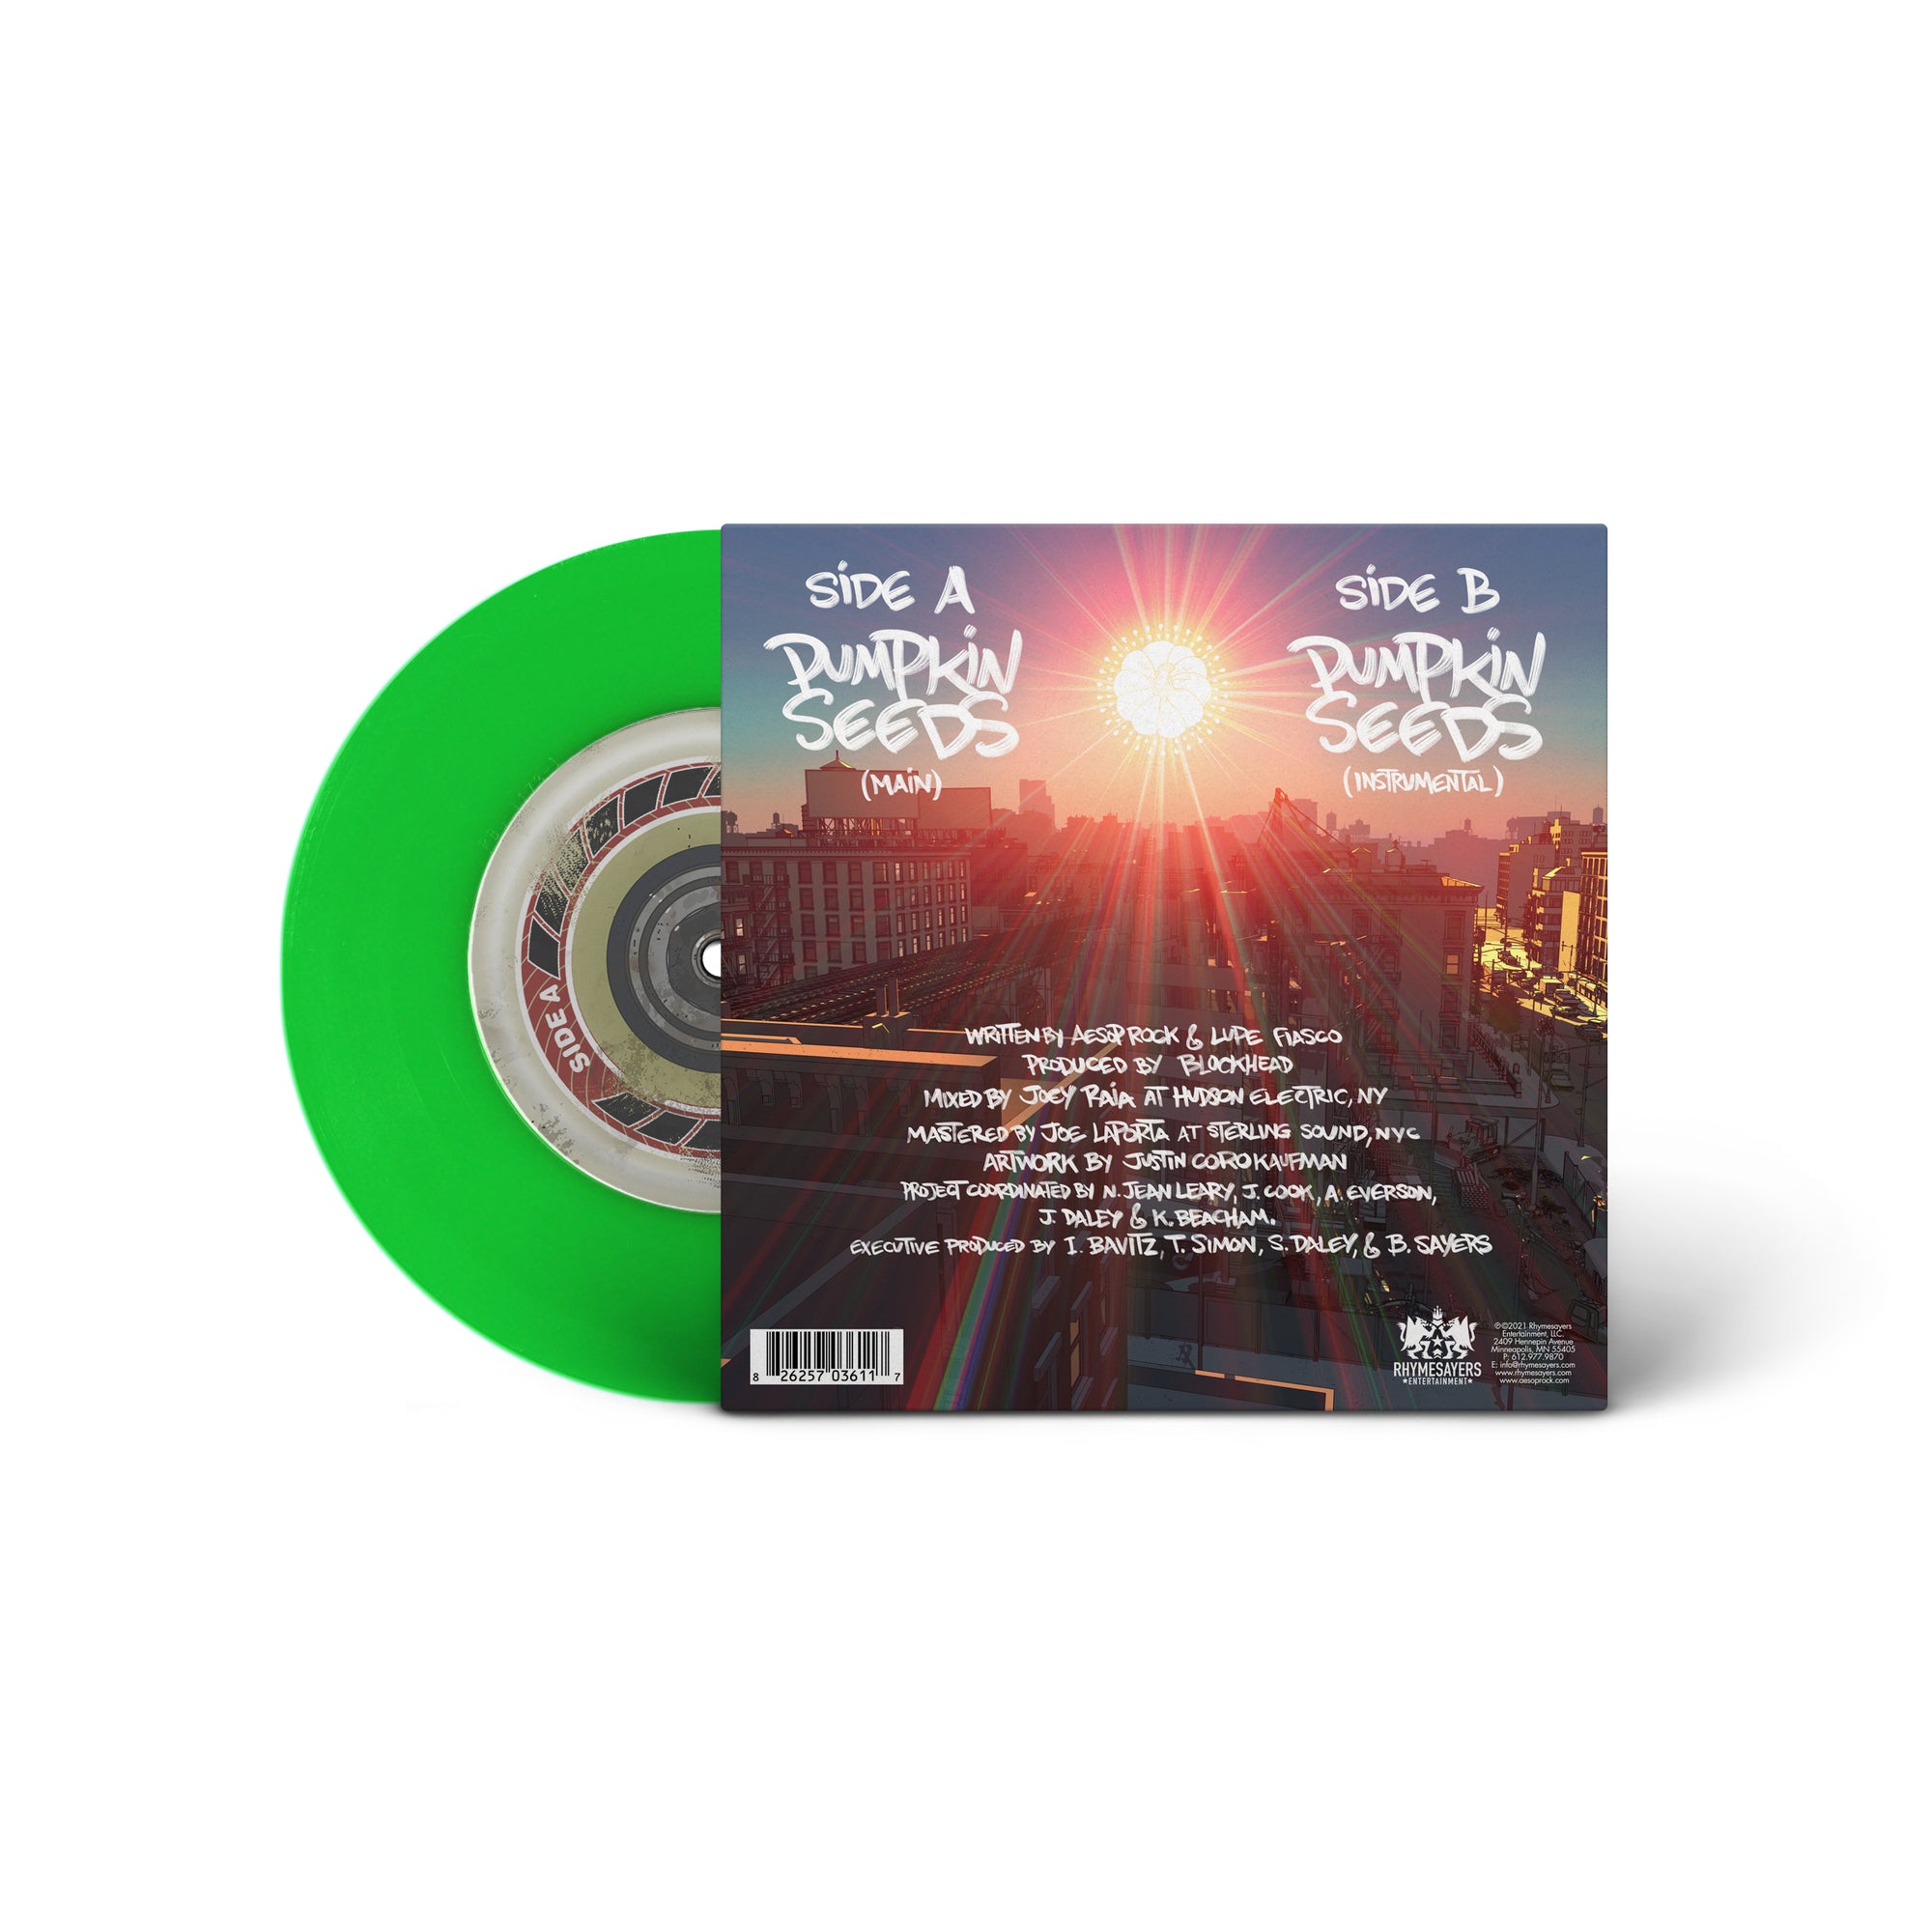 Aesop Rock x Blockhead - Pumpkin Seeds feat. Lupe Fiasco (Limited Neon Green 7” Vinyl)